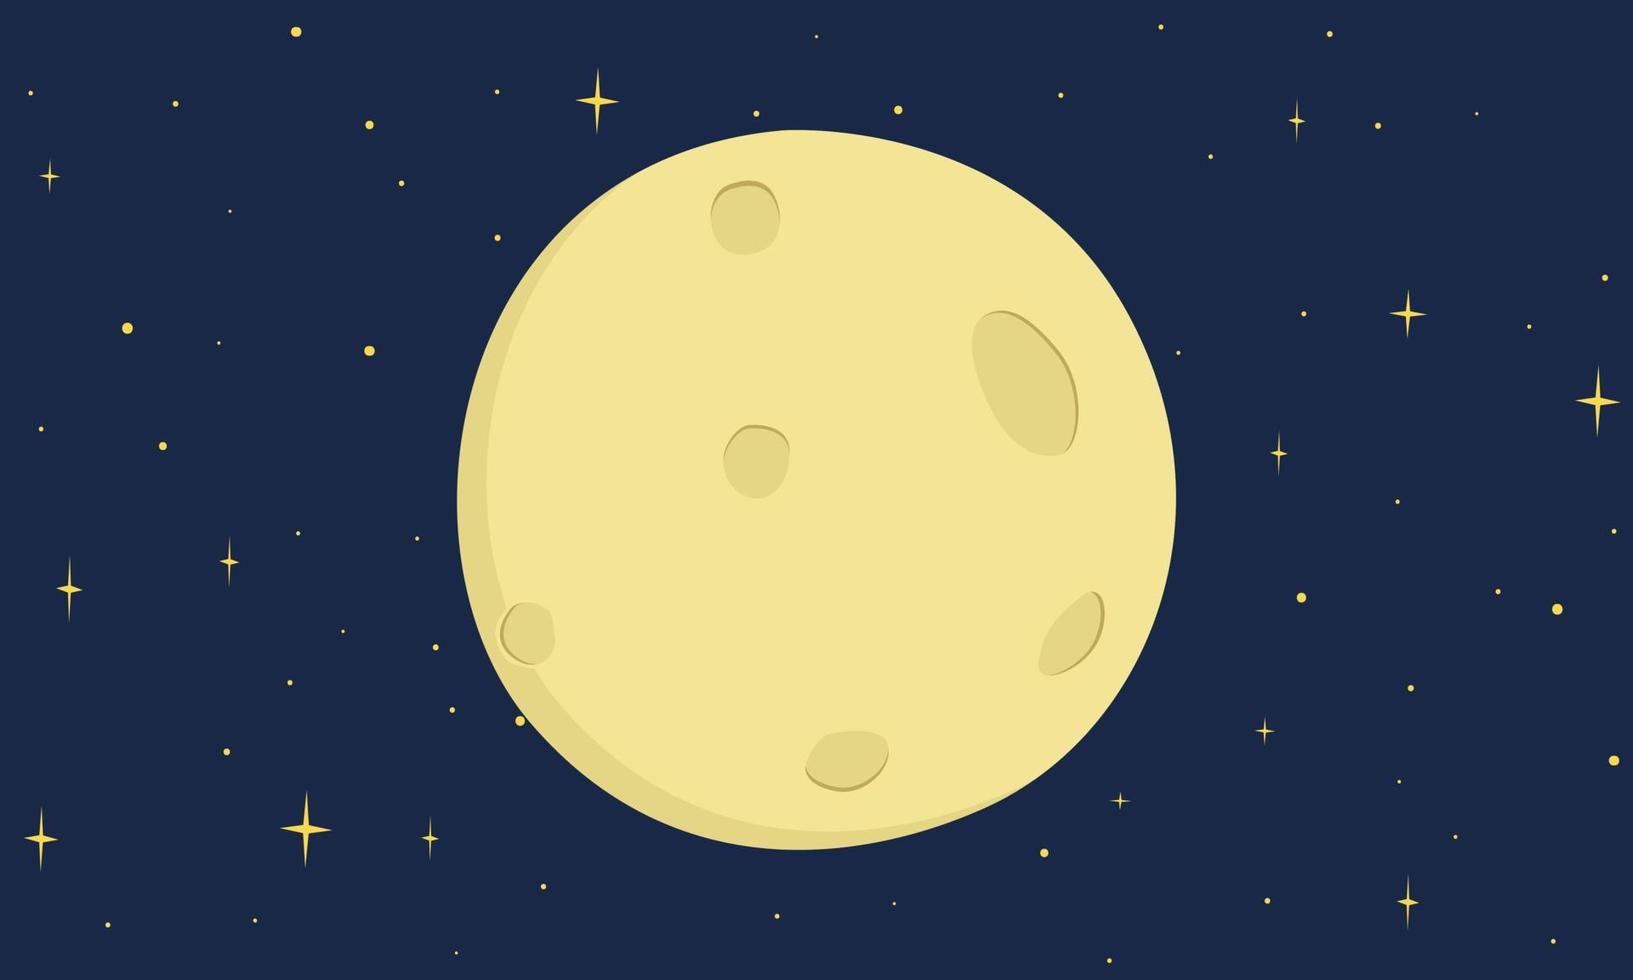 Full Moon vector design. Simple cute full Moon in flat design style. Full Moon clipart cartoon style illustration on dark night starry sky background. Moon Festival or Mid-Autumn Festival concept